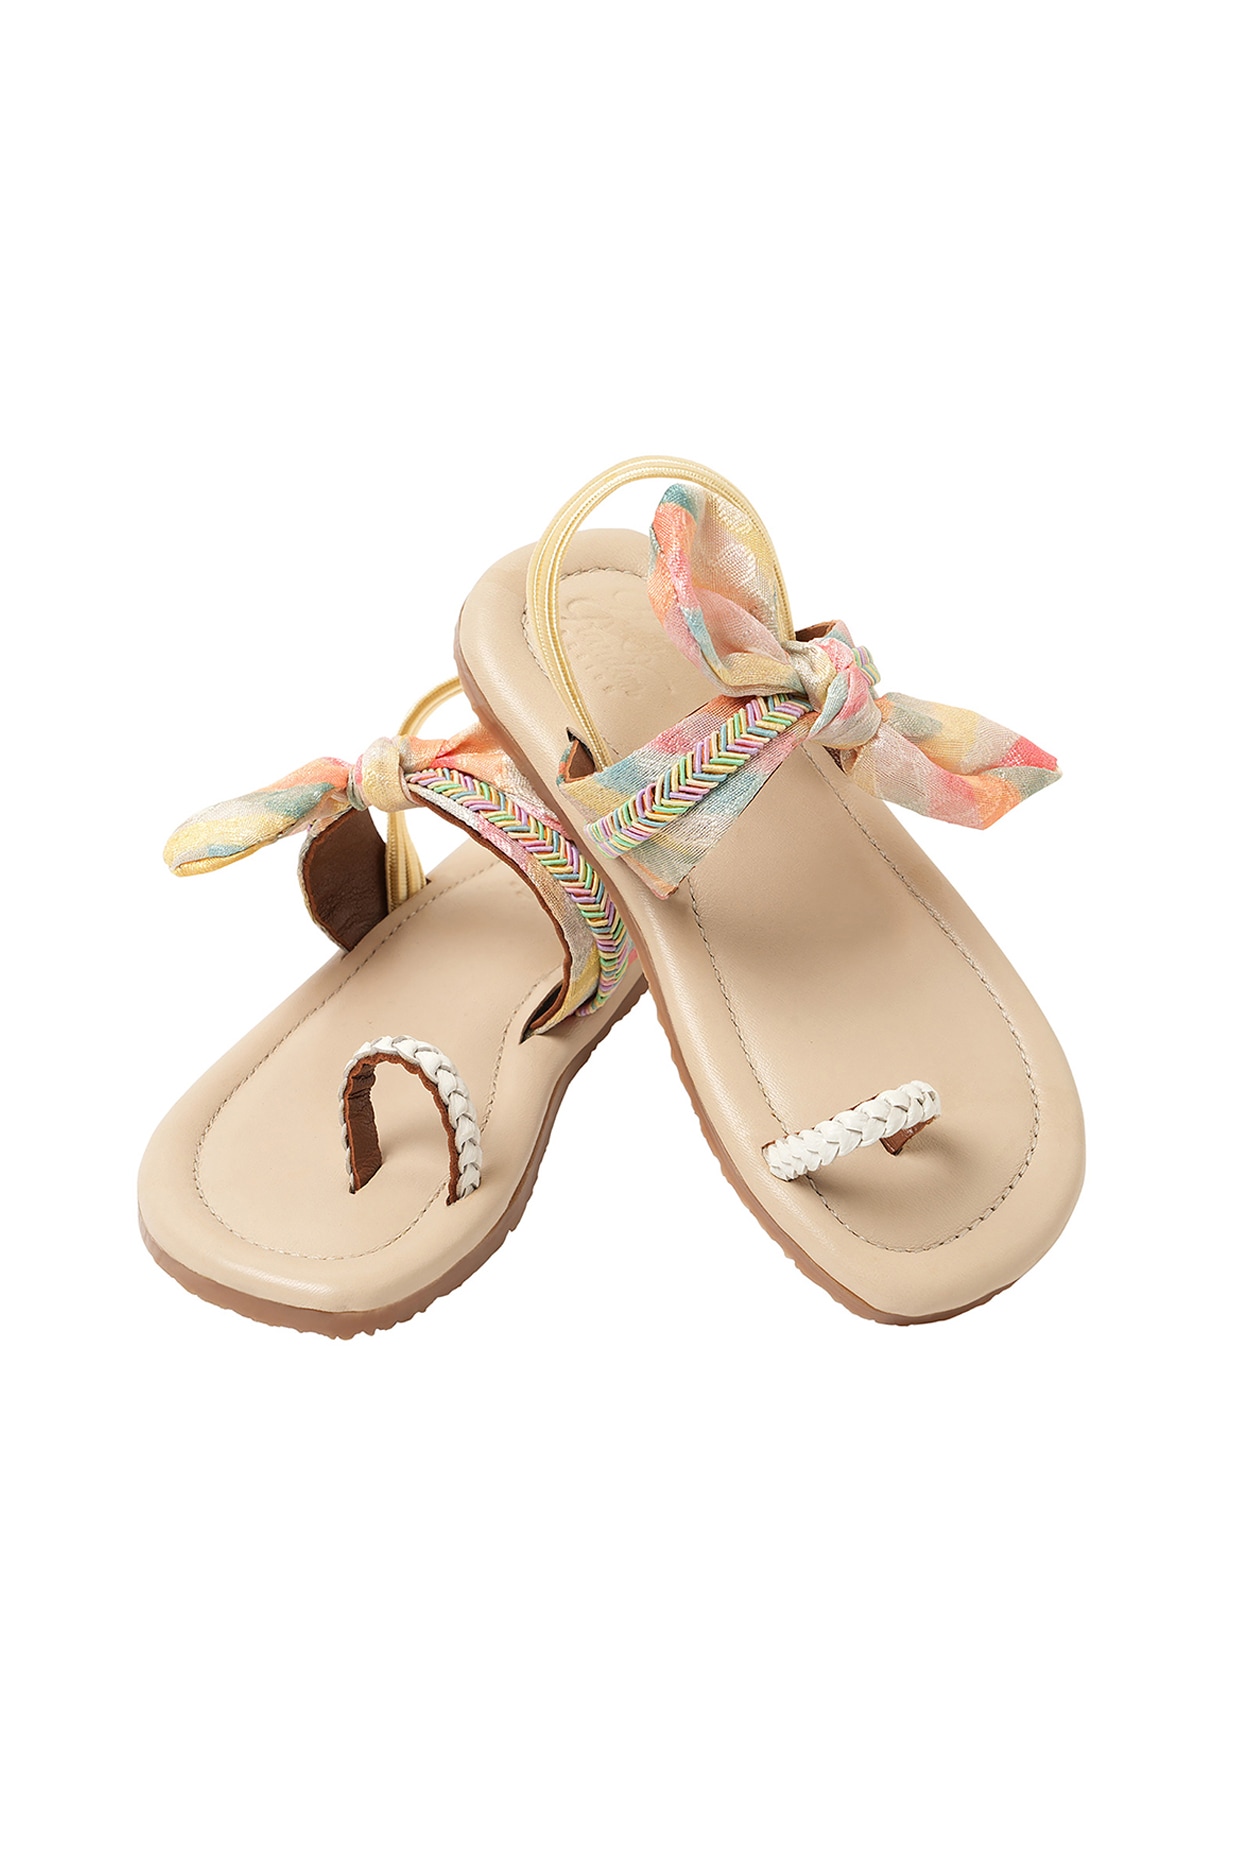 2023 latest design summer sandals soft| Alibaba.com